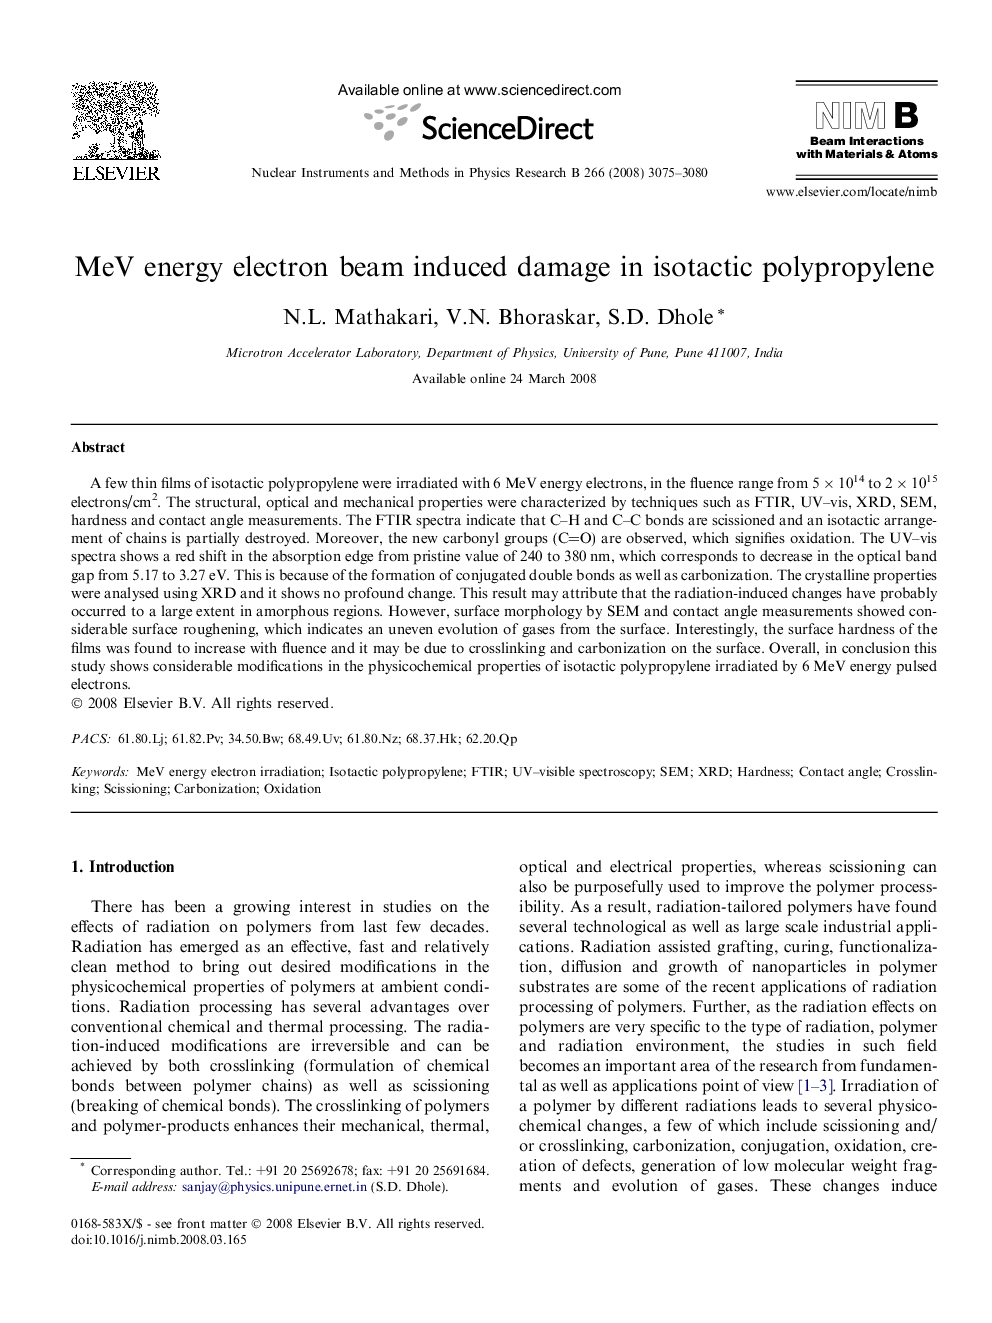 MeV energy electron beam induced damage in isotactic polypropylene